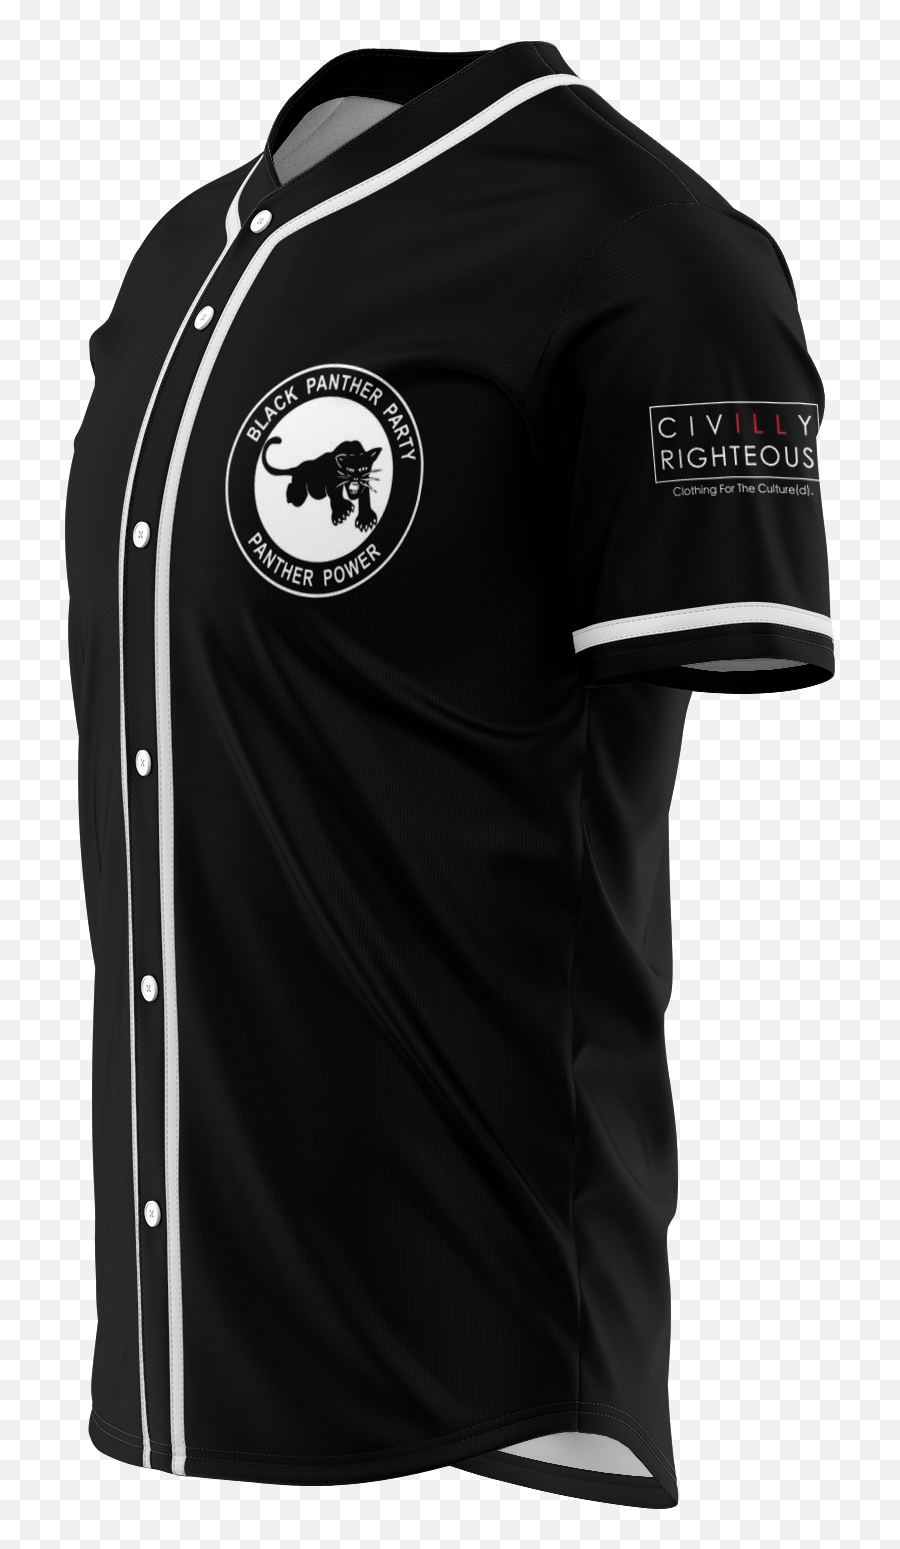 Black Panther Party - Baseball Uniform Png,Black Panther Party Logo